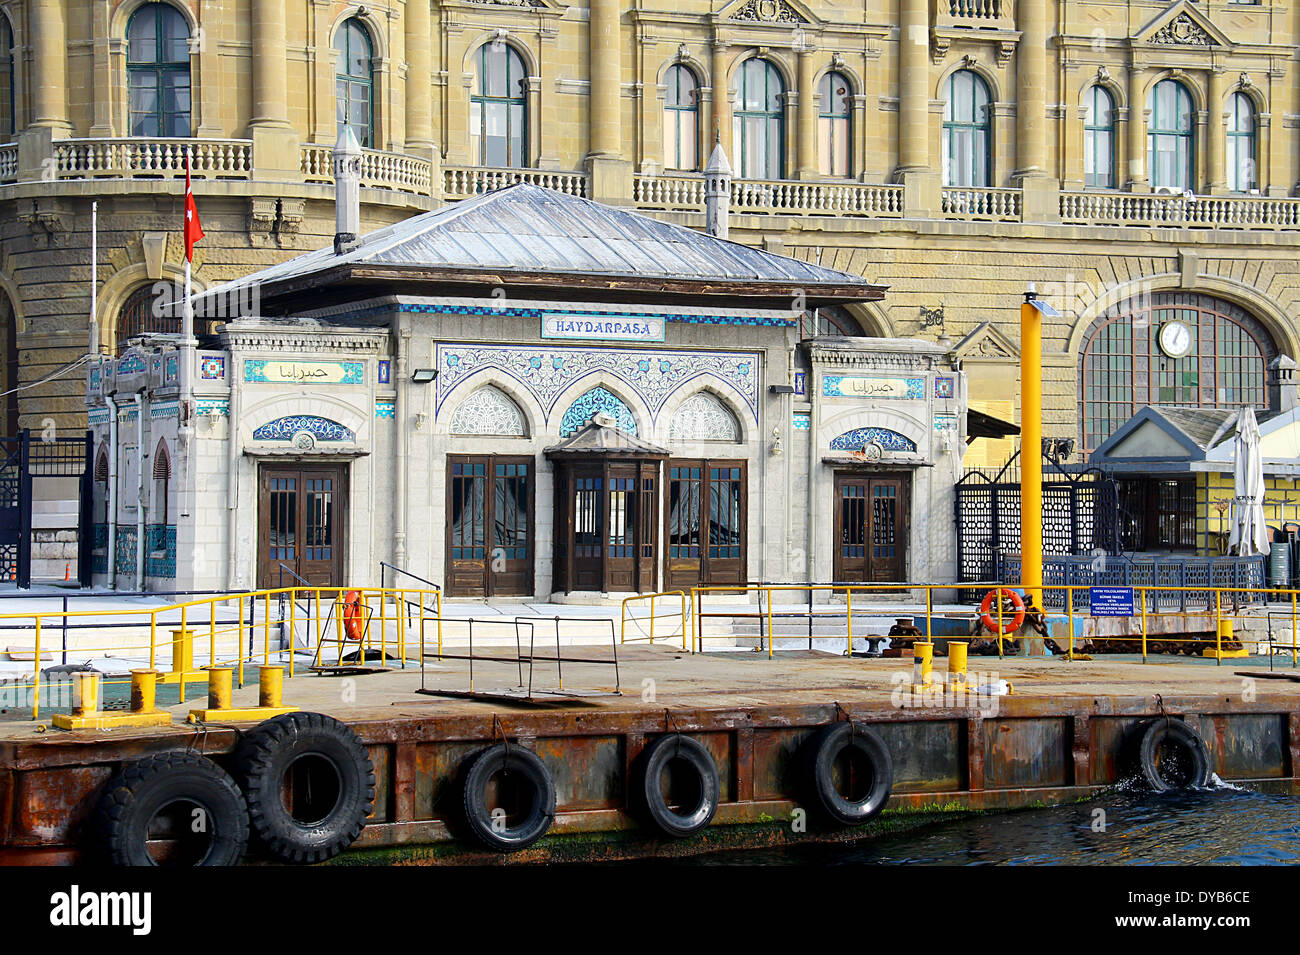 Historische Haydarpasa Seehafen In Istanbul Bosporus Stockfoto